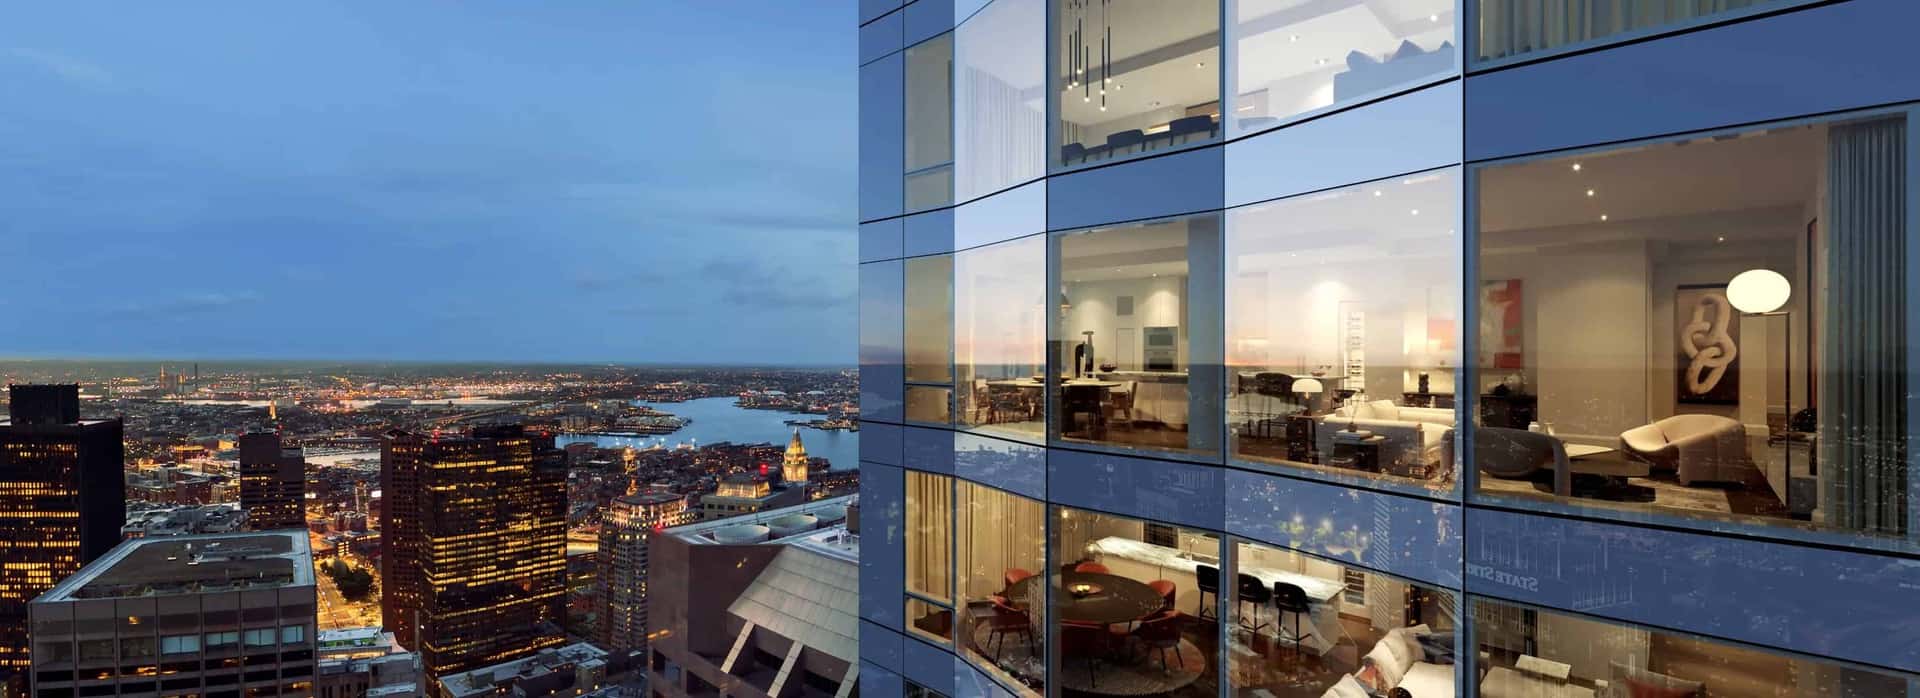 Winthrop Center | Downtown Boston Luxury Condos